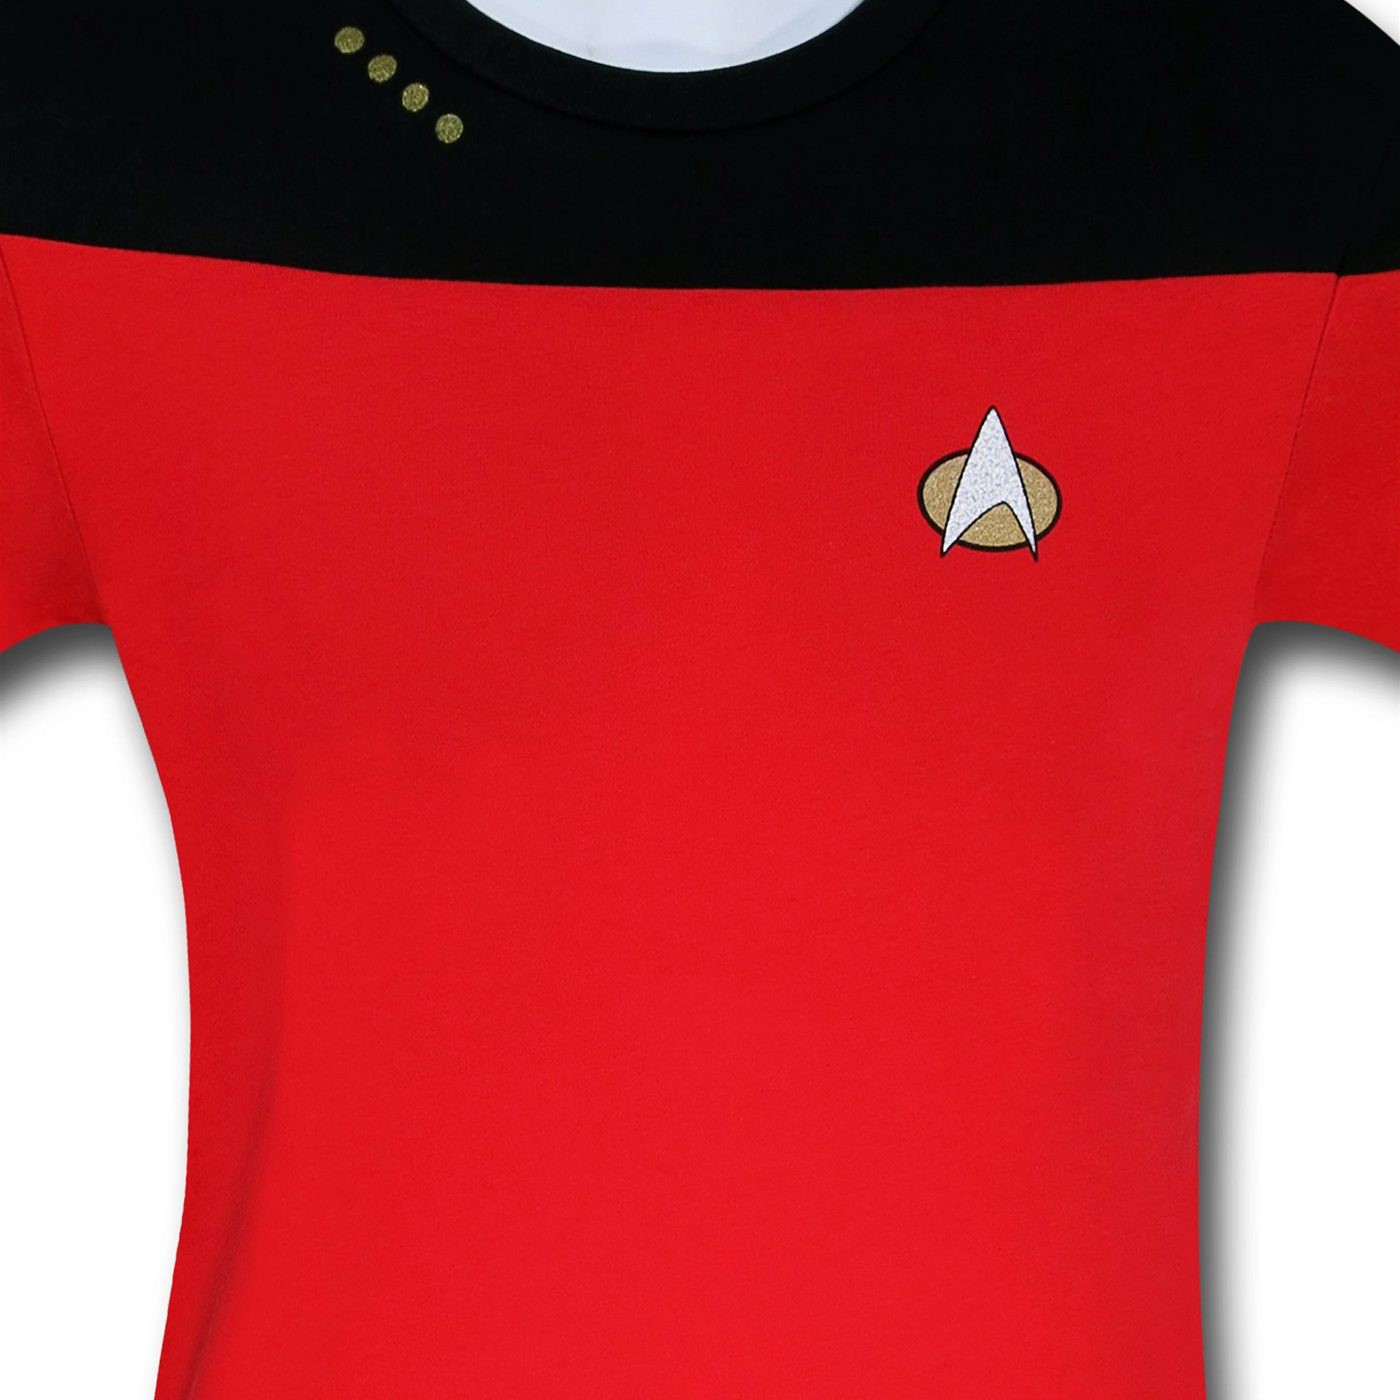 Star Trek Next Generation Red Costume T-Shirt